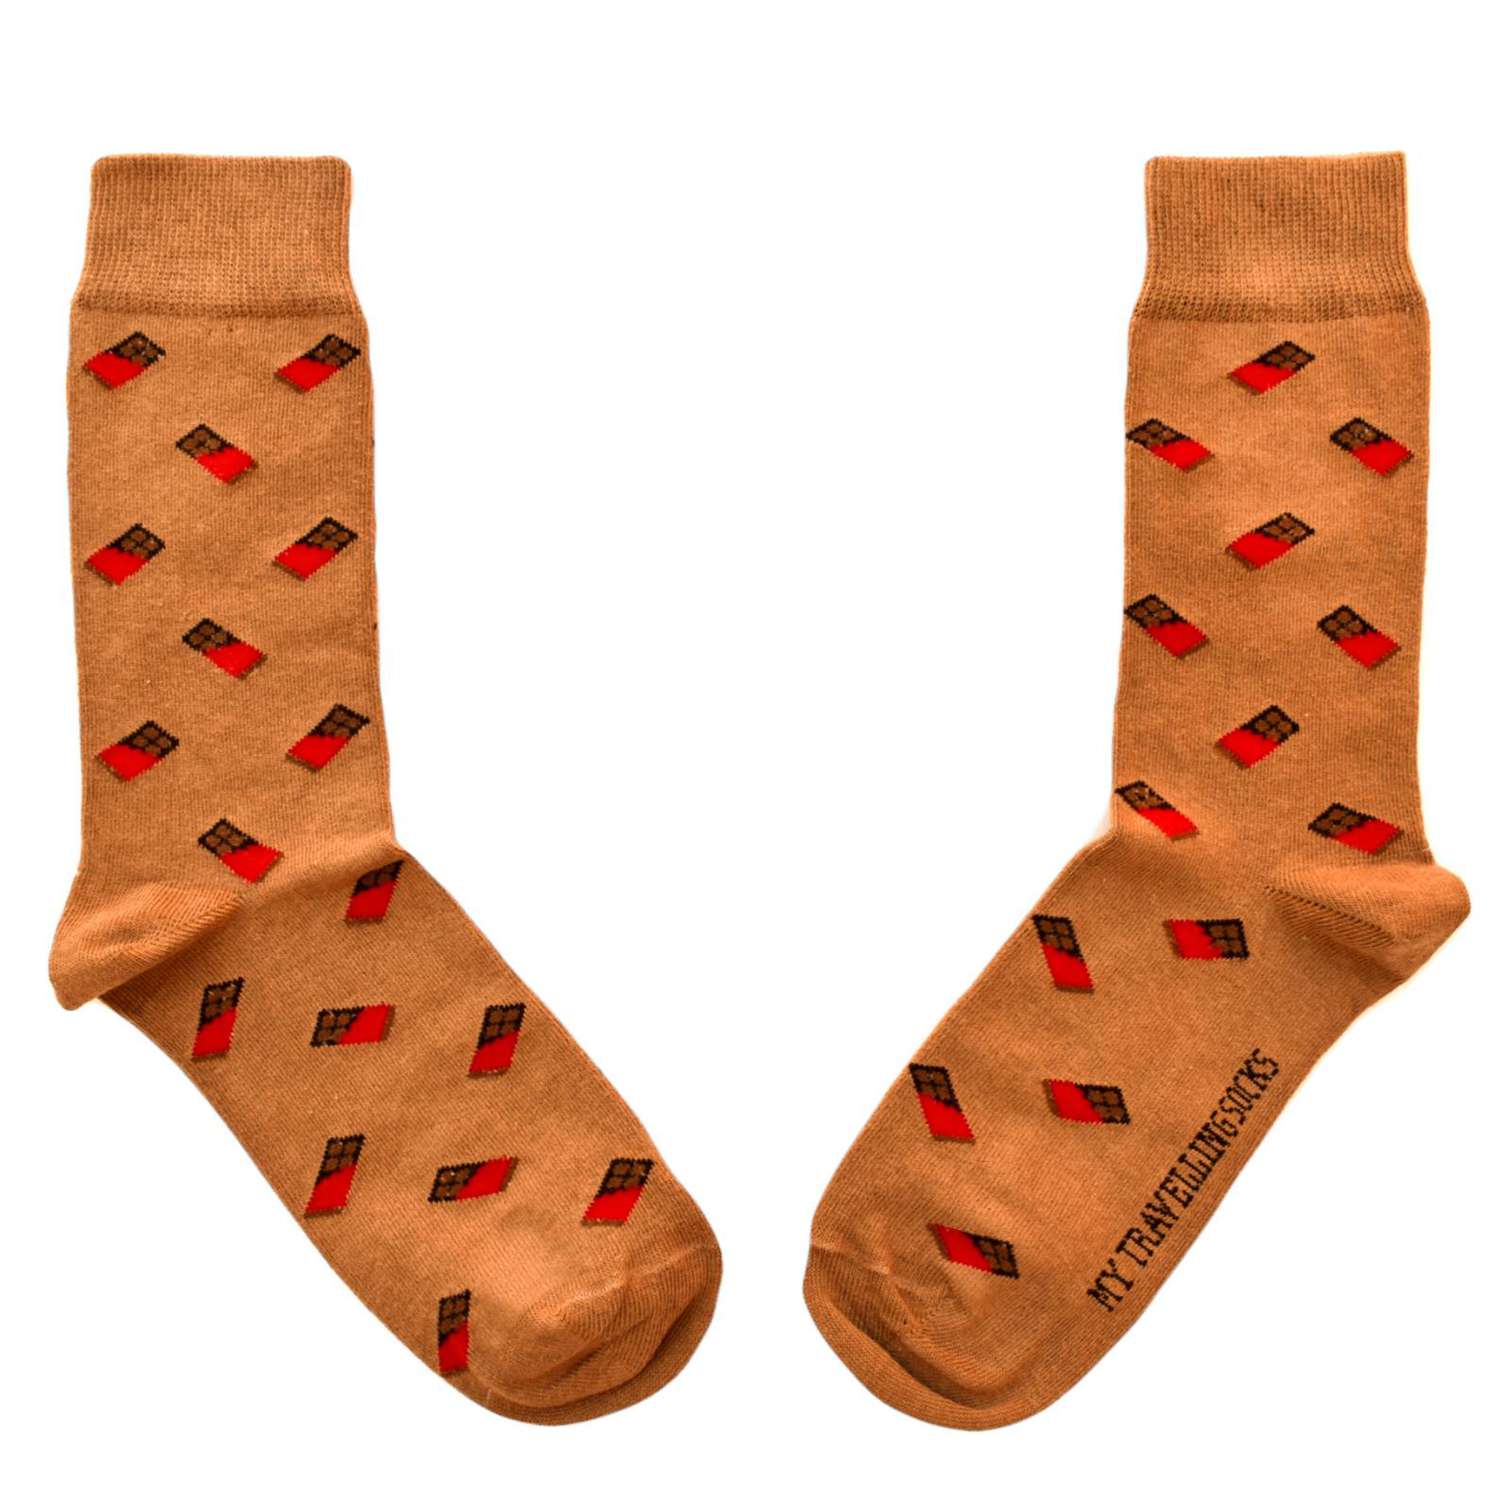 pair of socks with chocolate bar print